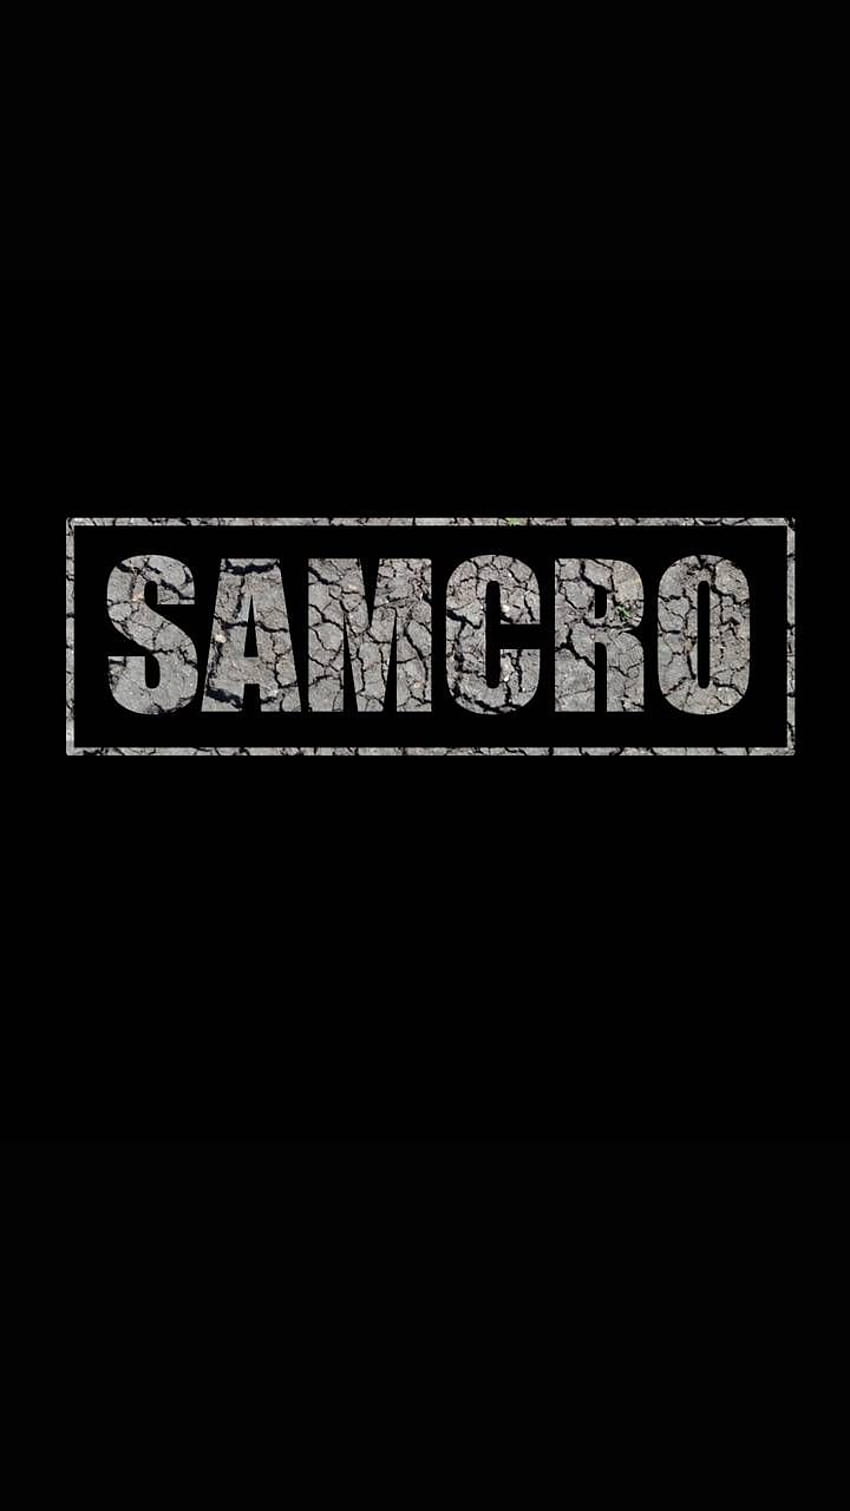 SAMCRO by Hrafna HD phone wallpaper